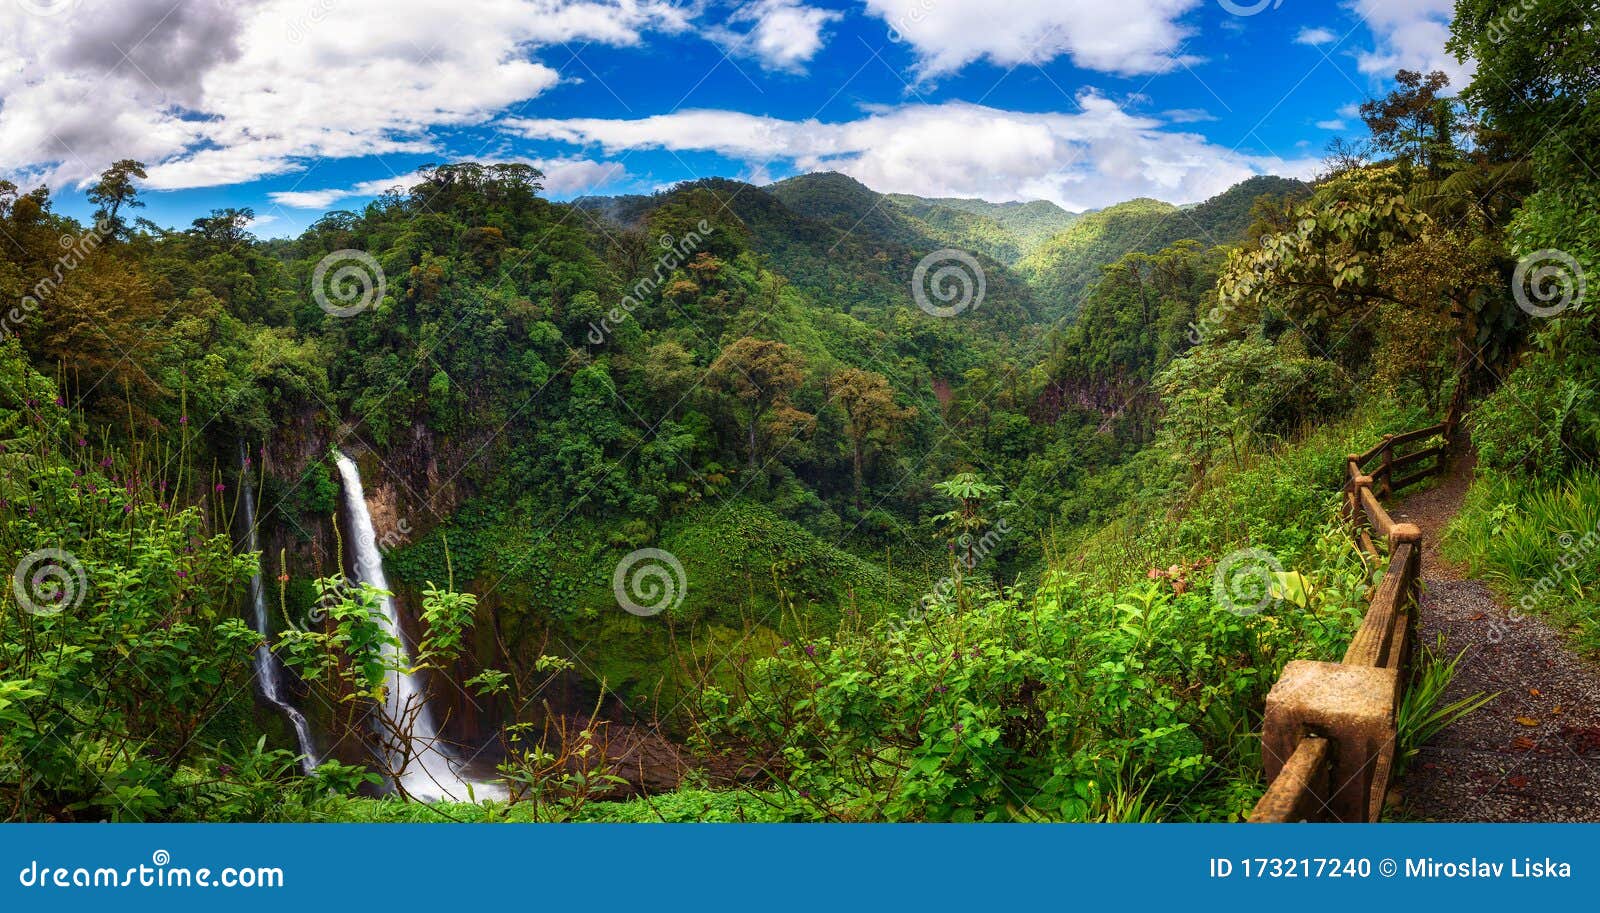 catarata del toro waterfall with surrounding mountains in costa rica